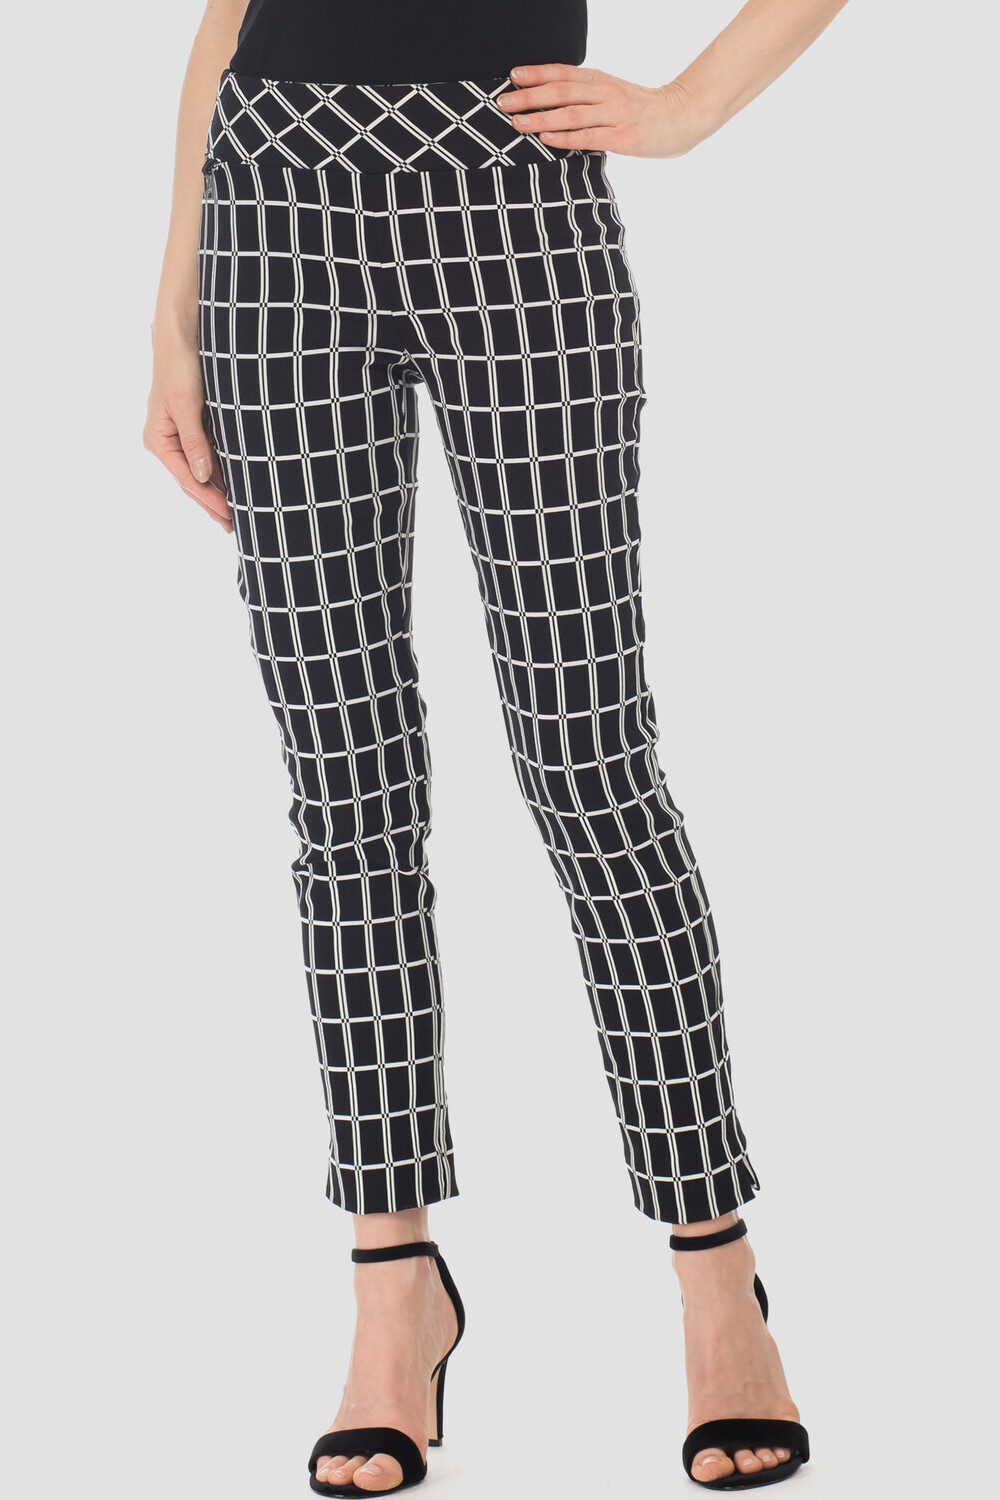 Joseph Ribkoff pantalon Style 183554. Noir/blanc